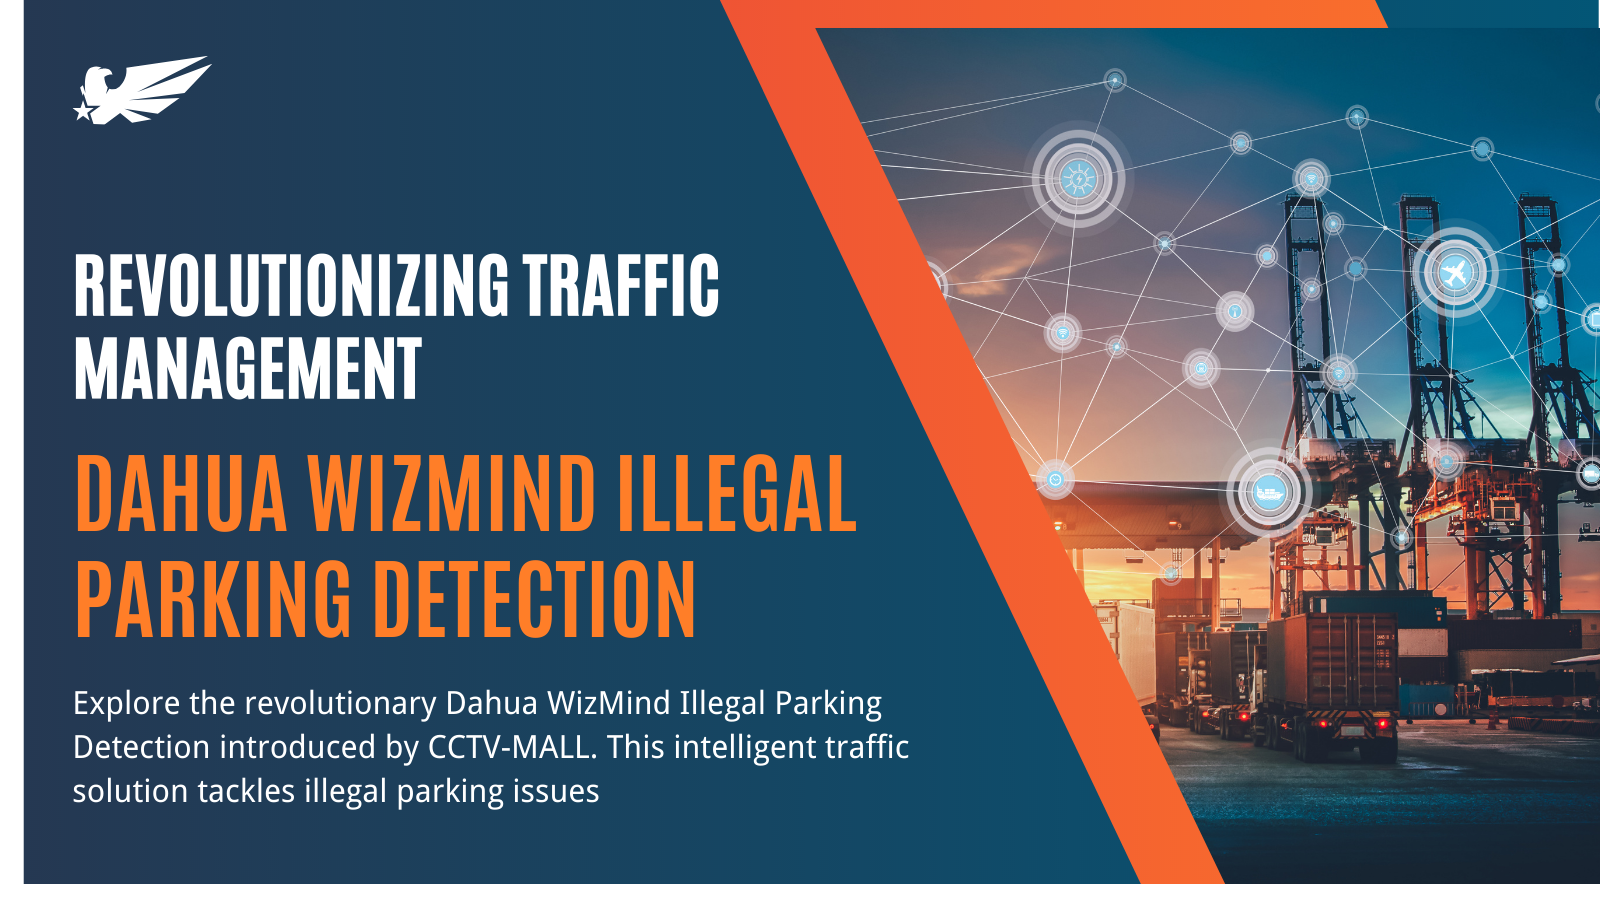 Dahua WizMind Illegal Parking Detection